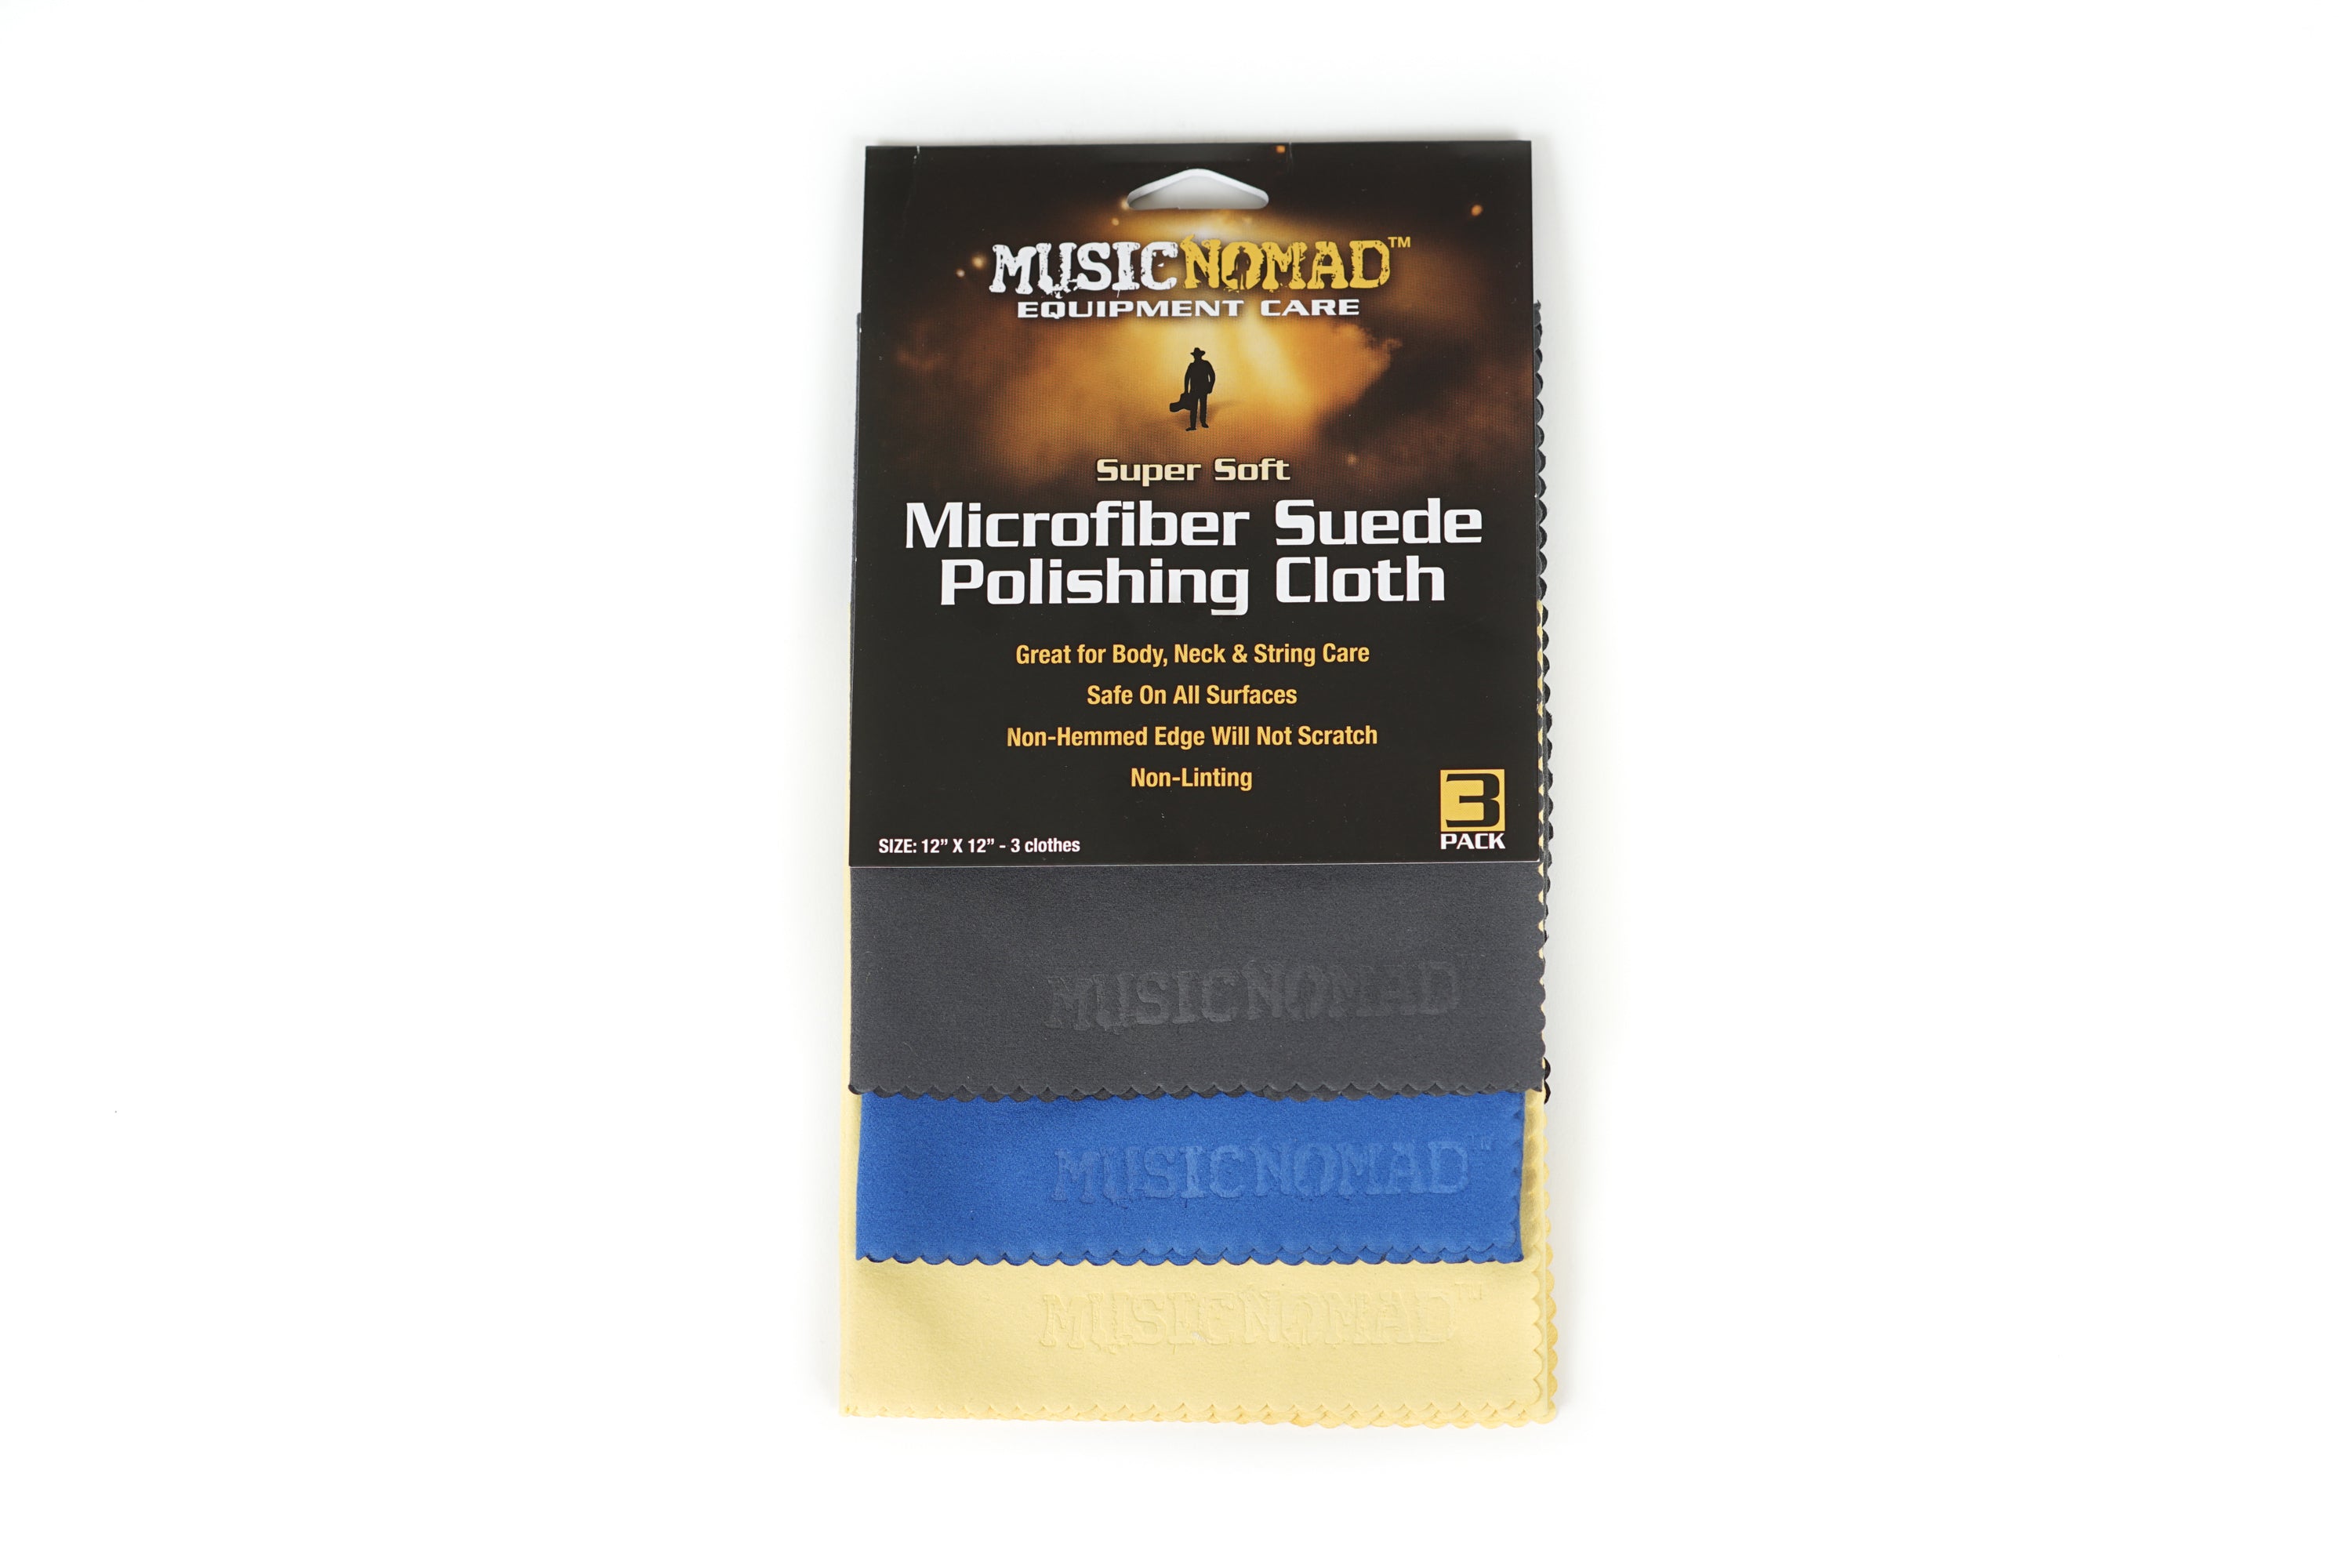 Music Nomad Super Soft Edgeless Microfiber Suede Polishing Cloth - 3 pack MN203 - HIENDGUITAR   musicnomad musicnomad